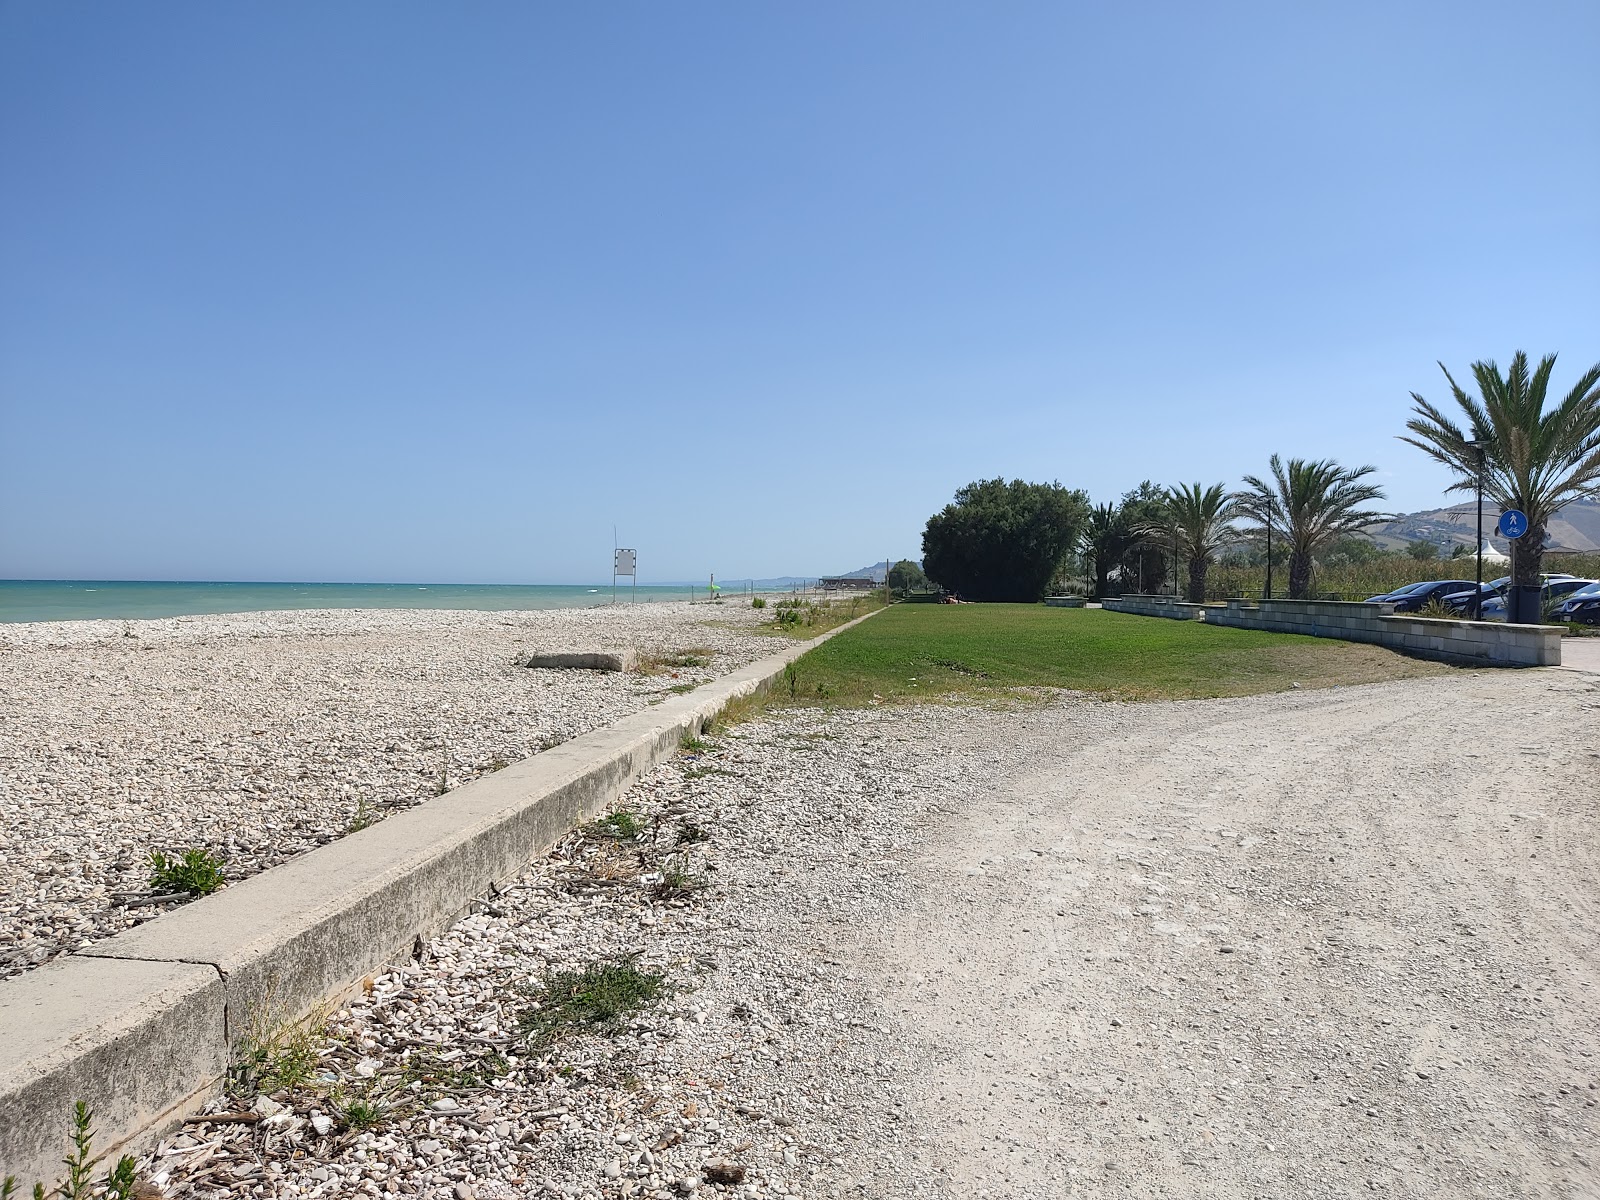 Photo of Spiaggia di Scerne with long straight shore